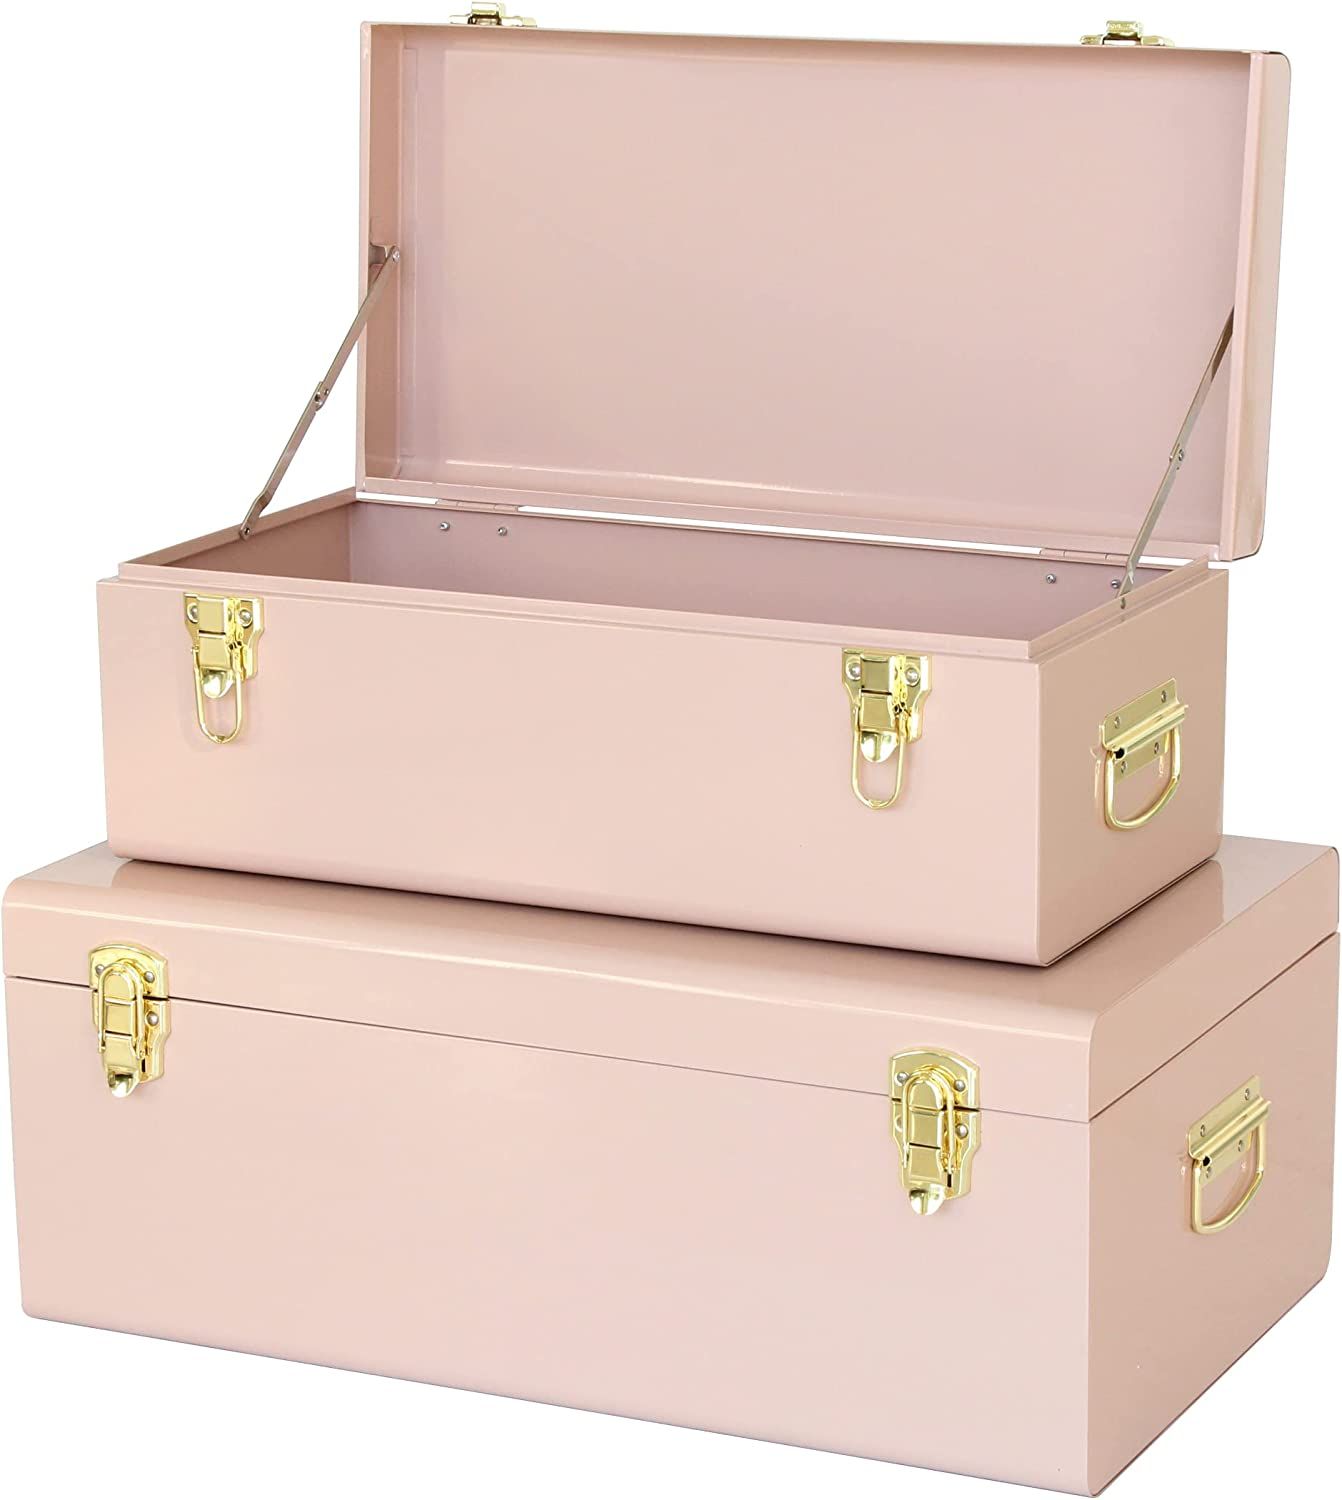 Vixdonos Metal Trunks College Dorm Steel Chests Decorative Storage Box Set of 2 Toy Organizer for... | Amazon (US)